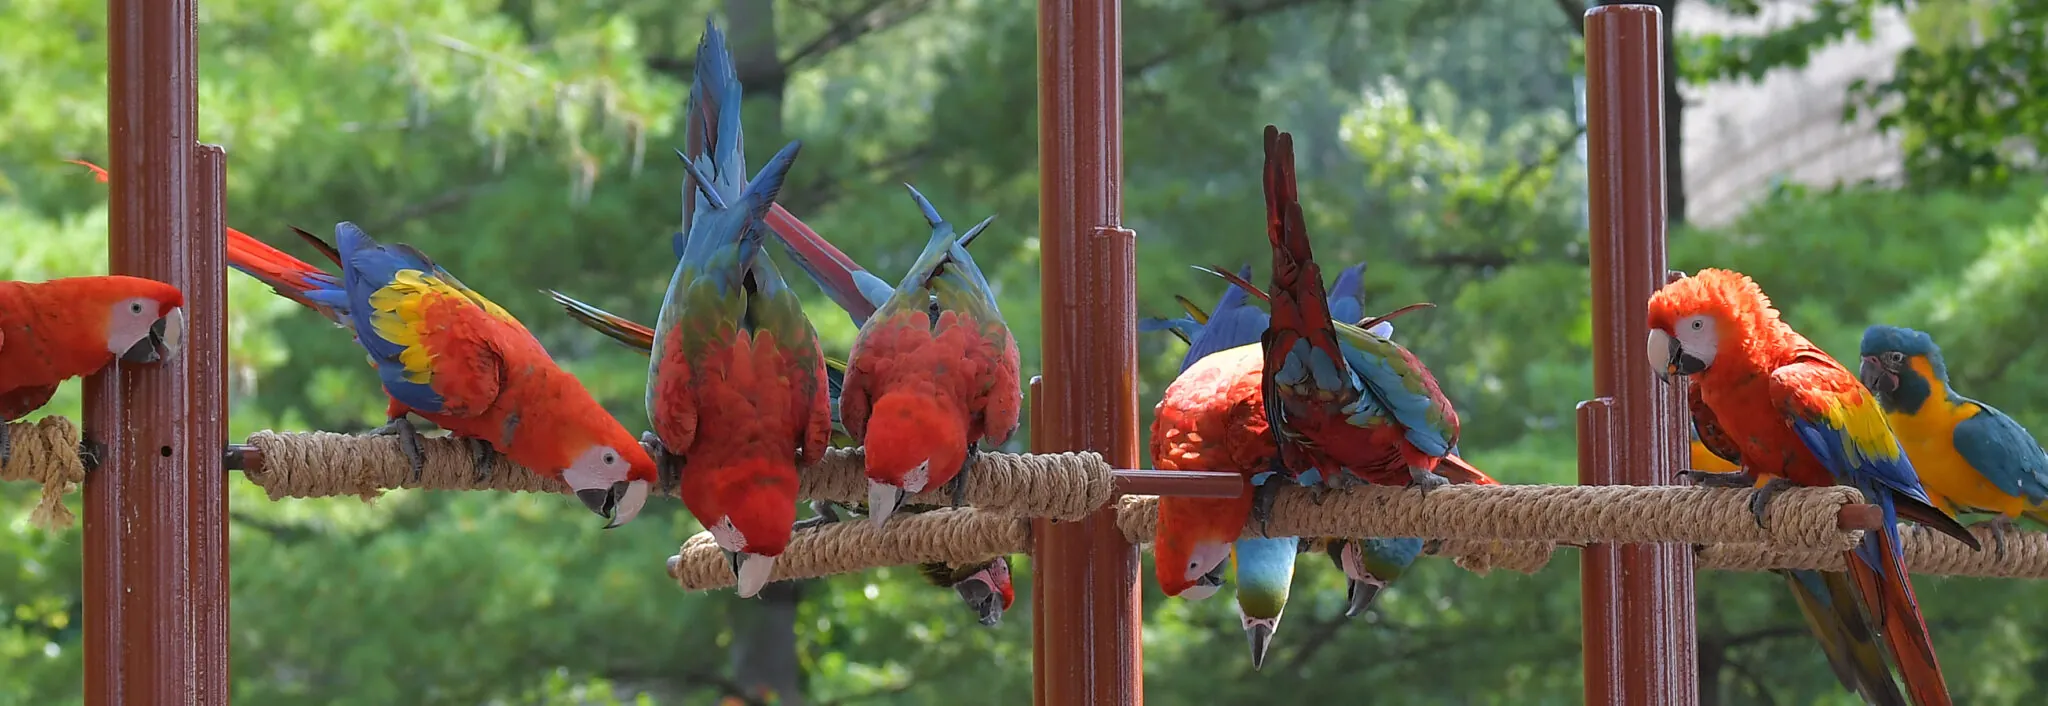 Macaws feeding from a perch